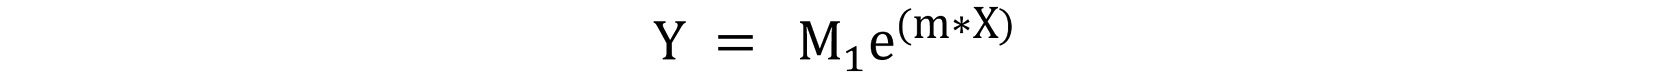 Figure 5.40: Exponential trend line formula
